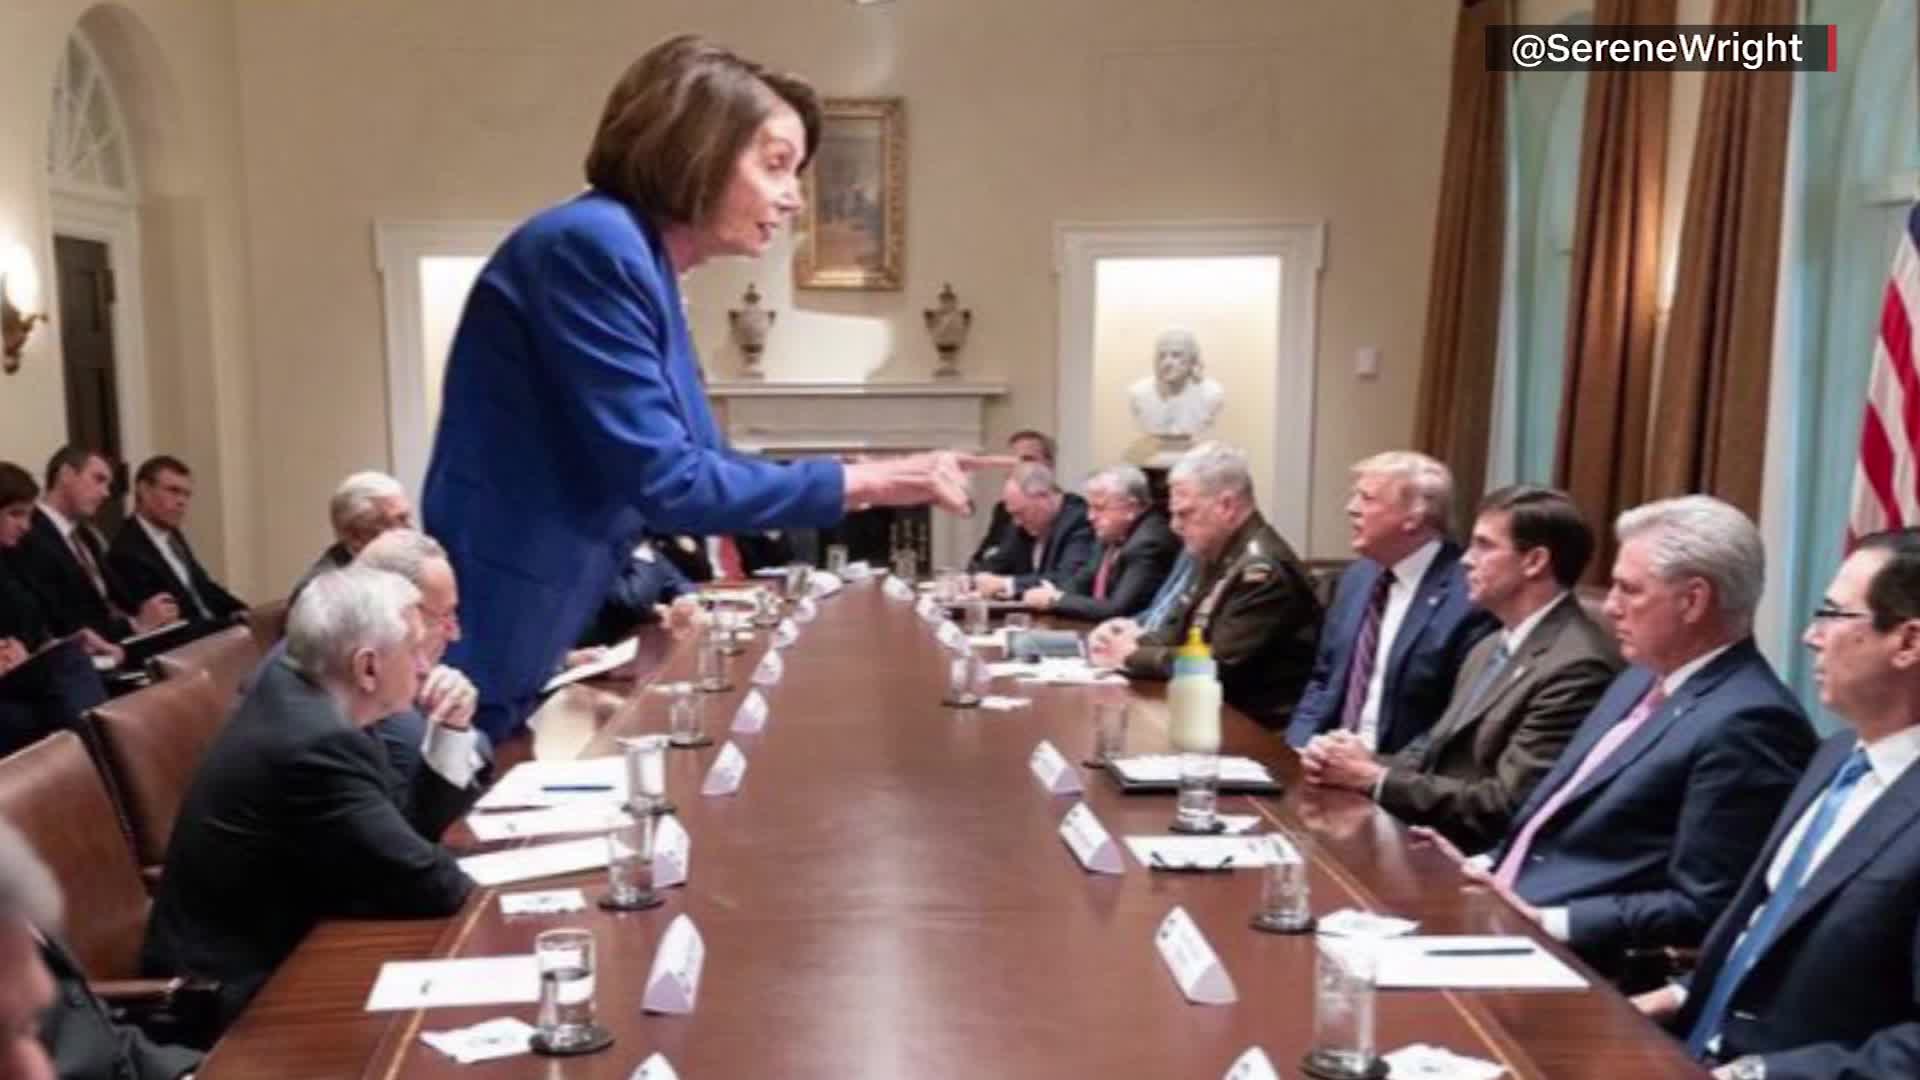 Internet melts down over Nancy Pelosi photo from Trump meeting - CNN Video